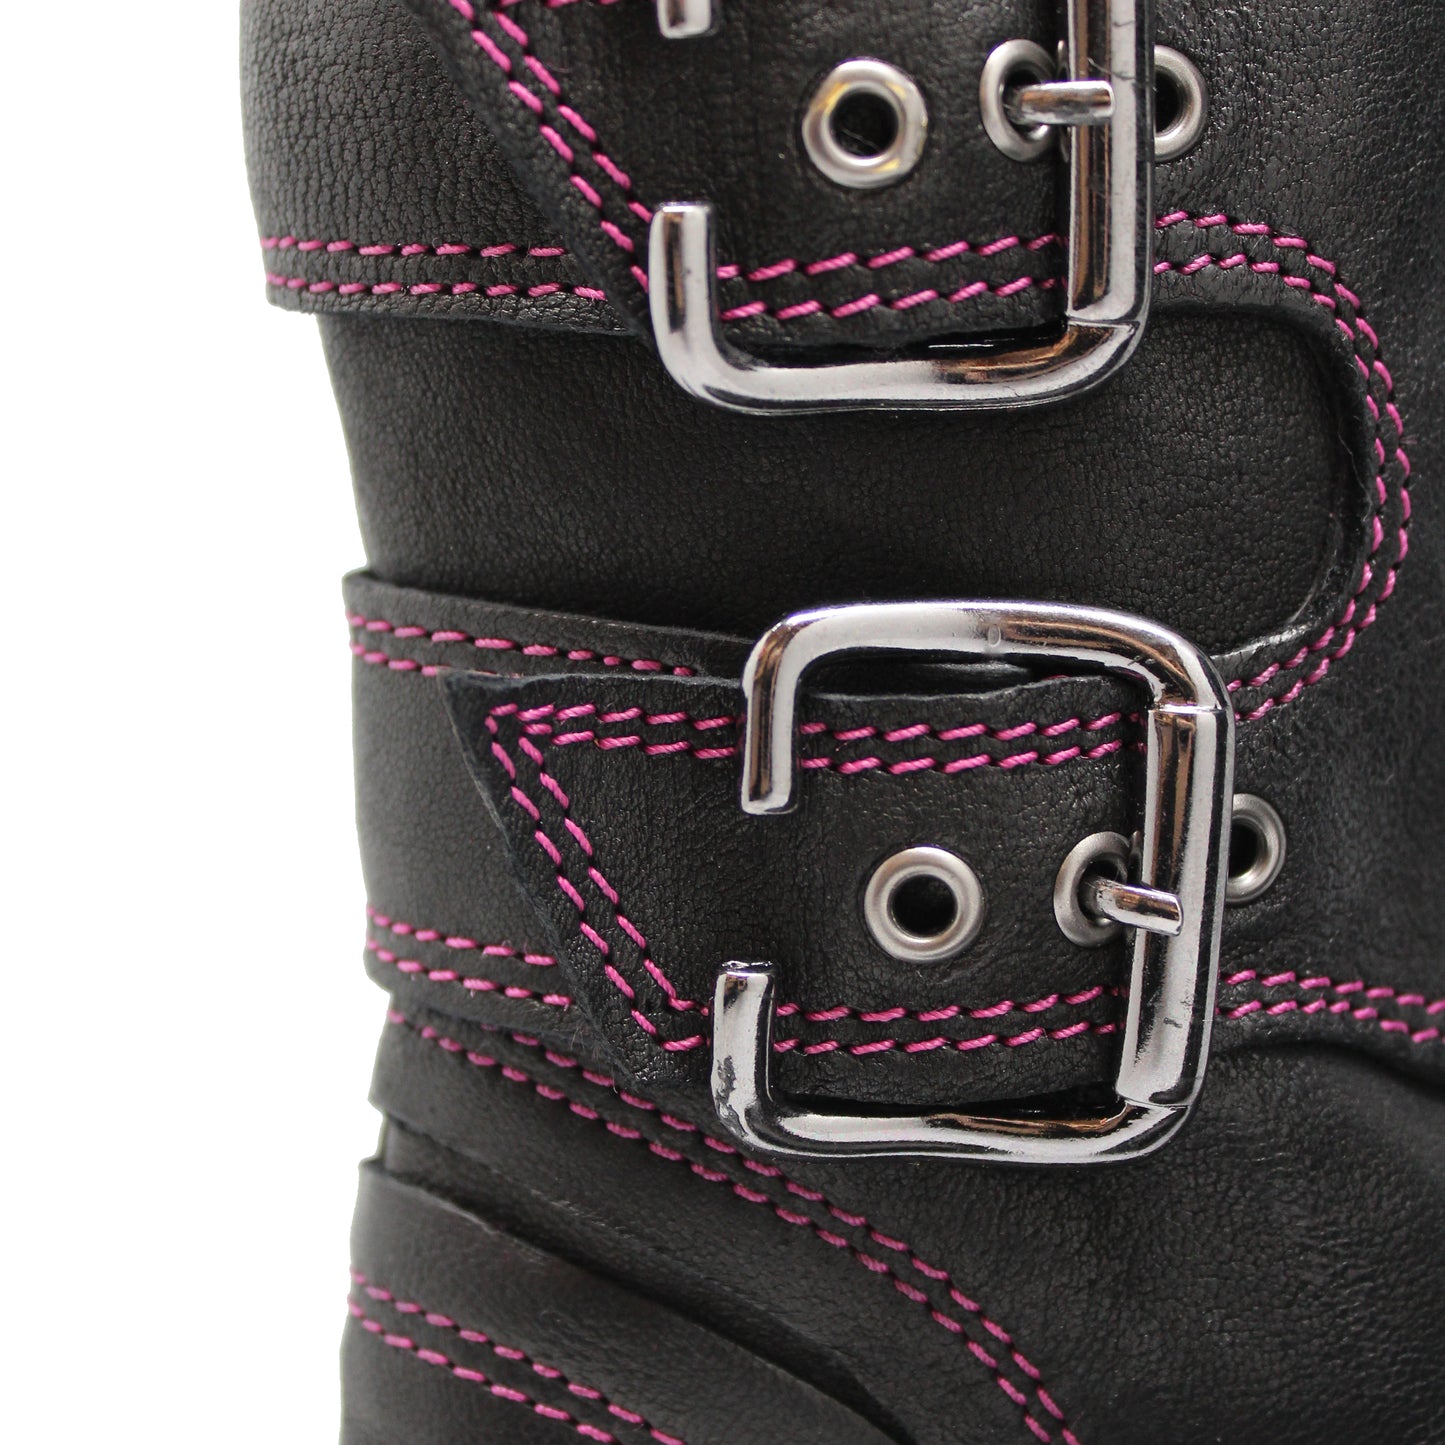 Bon Amie -Lace up ankle boot- Black Fuchsia